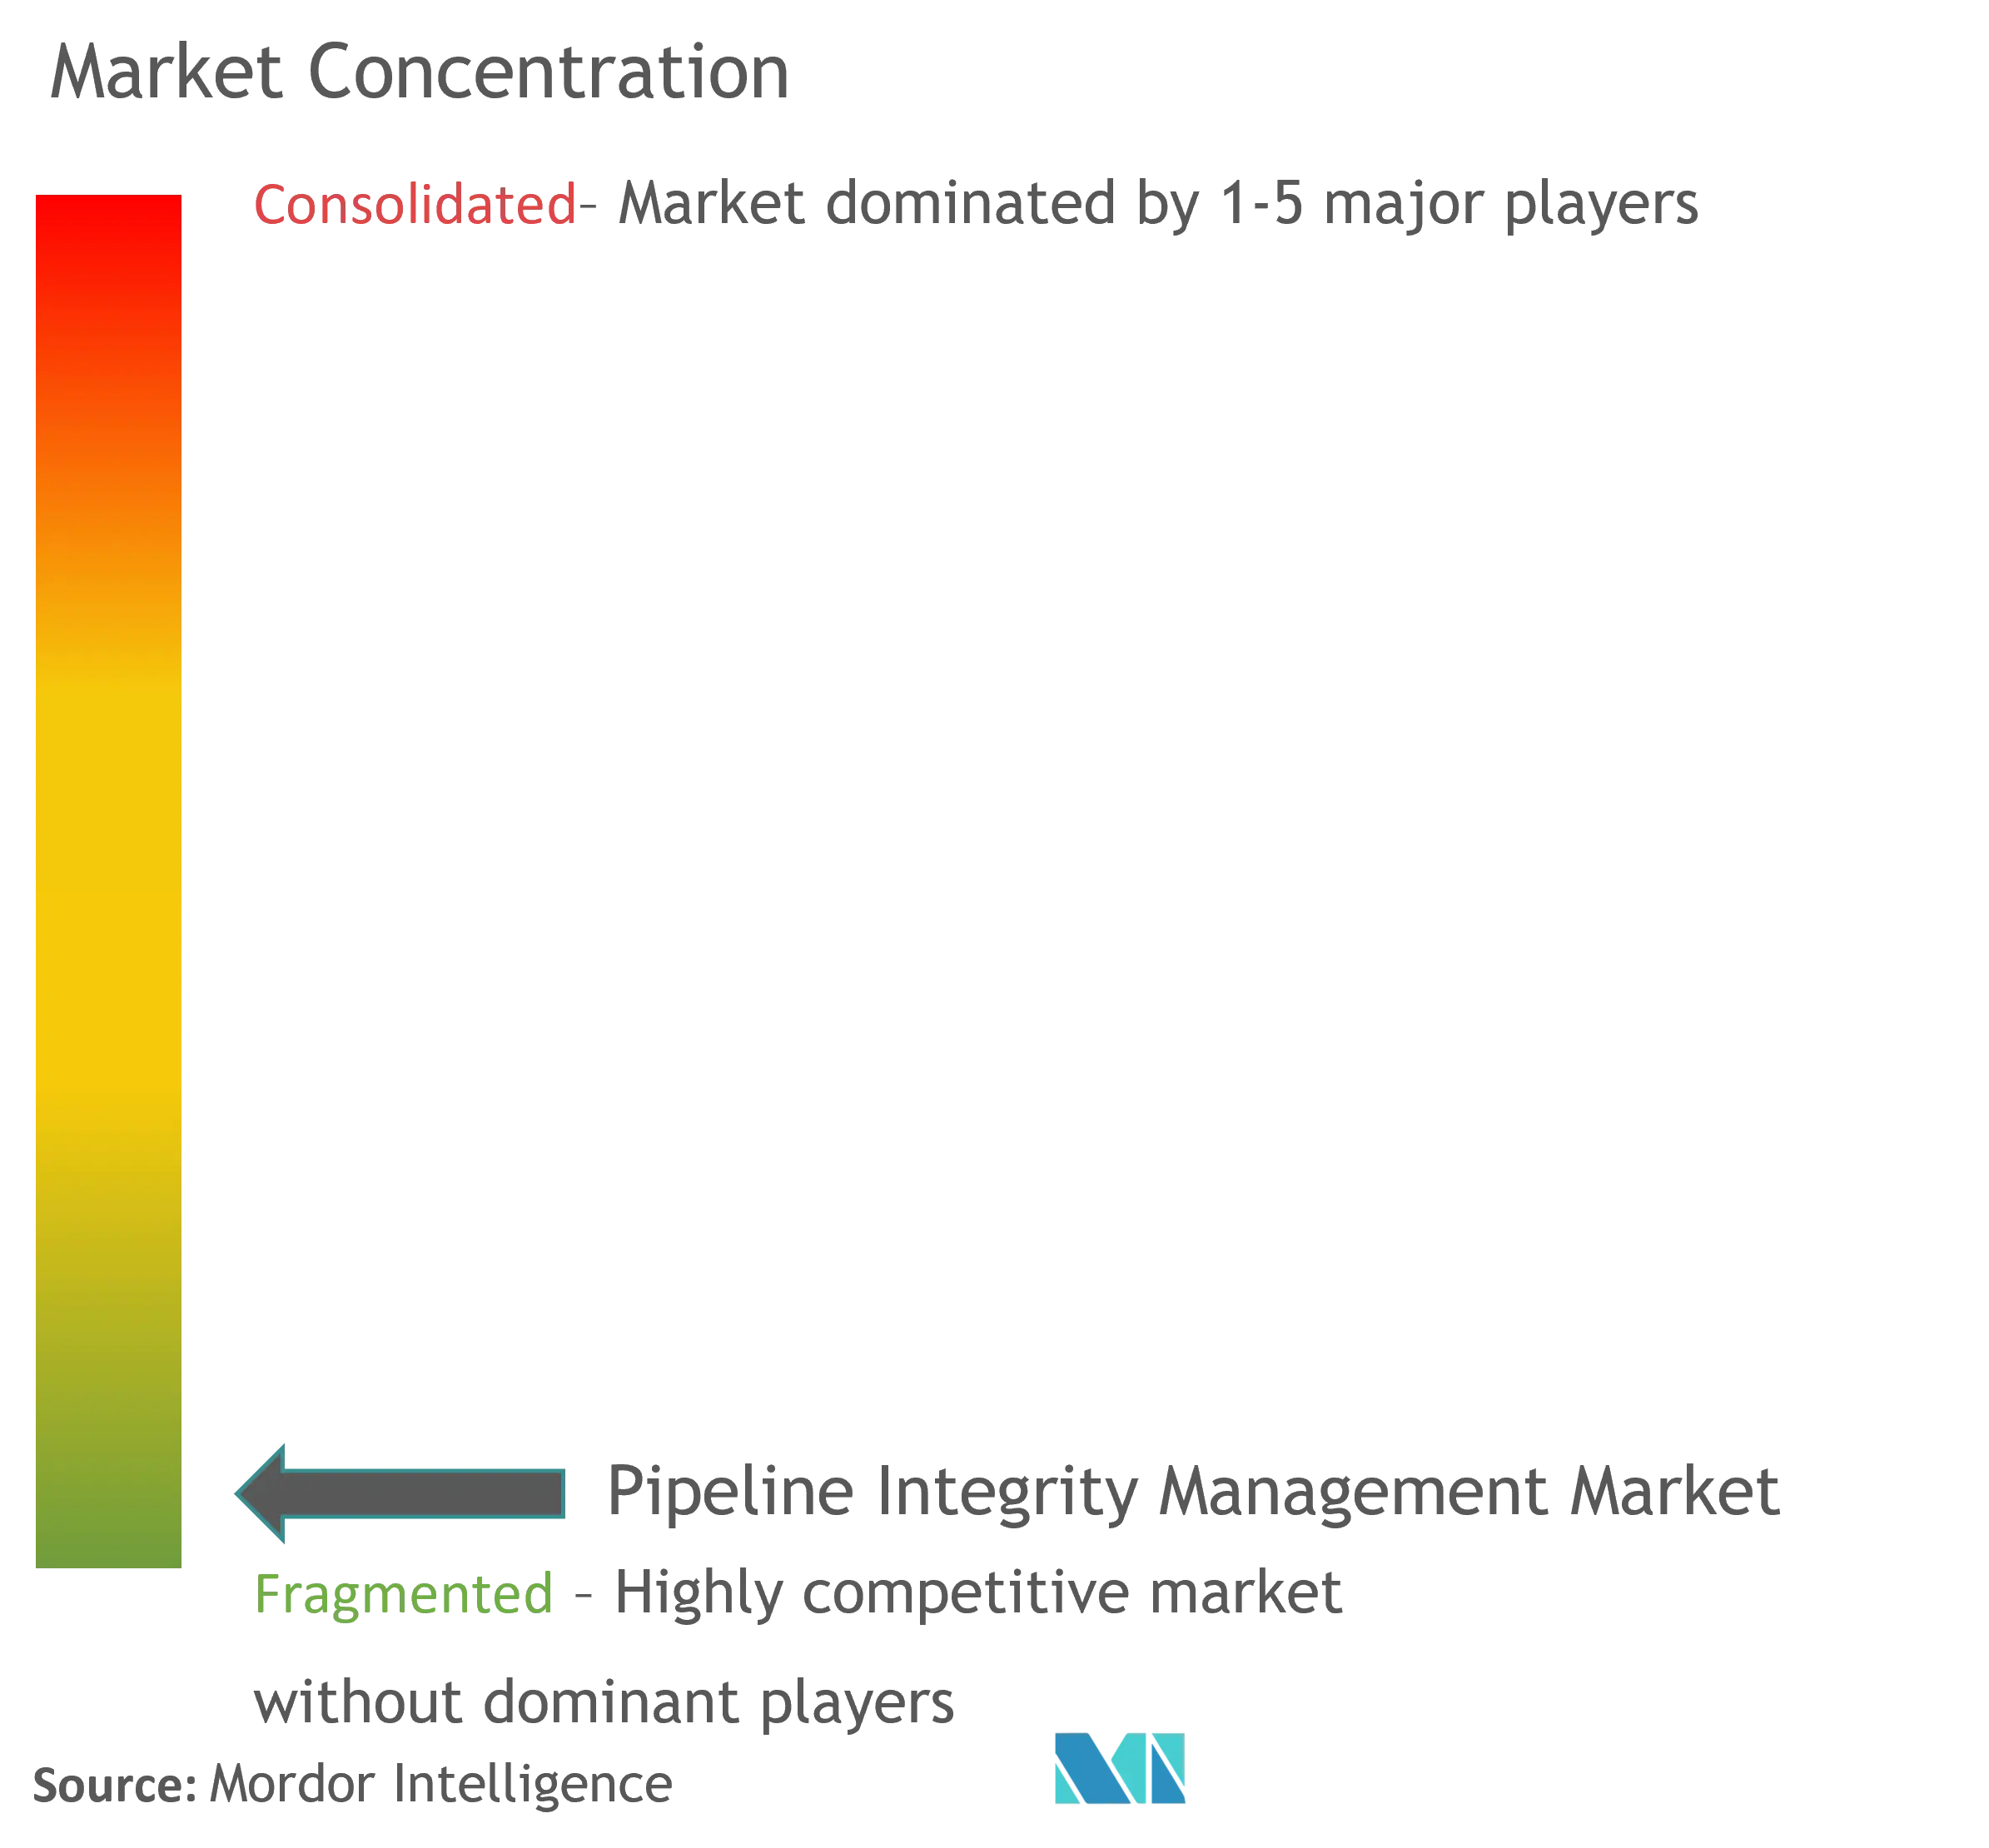 Pipeline Integrated Management Market Concentration